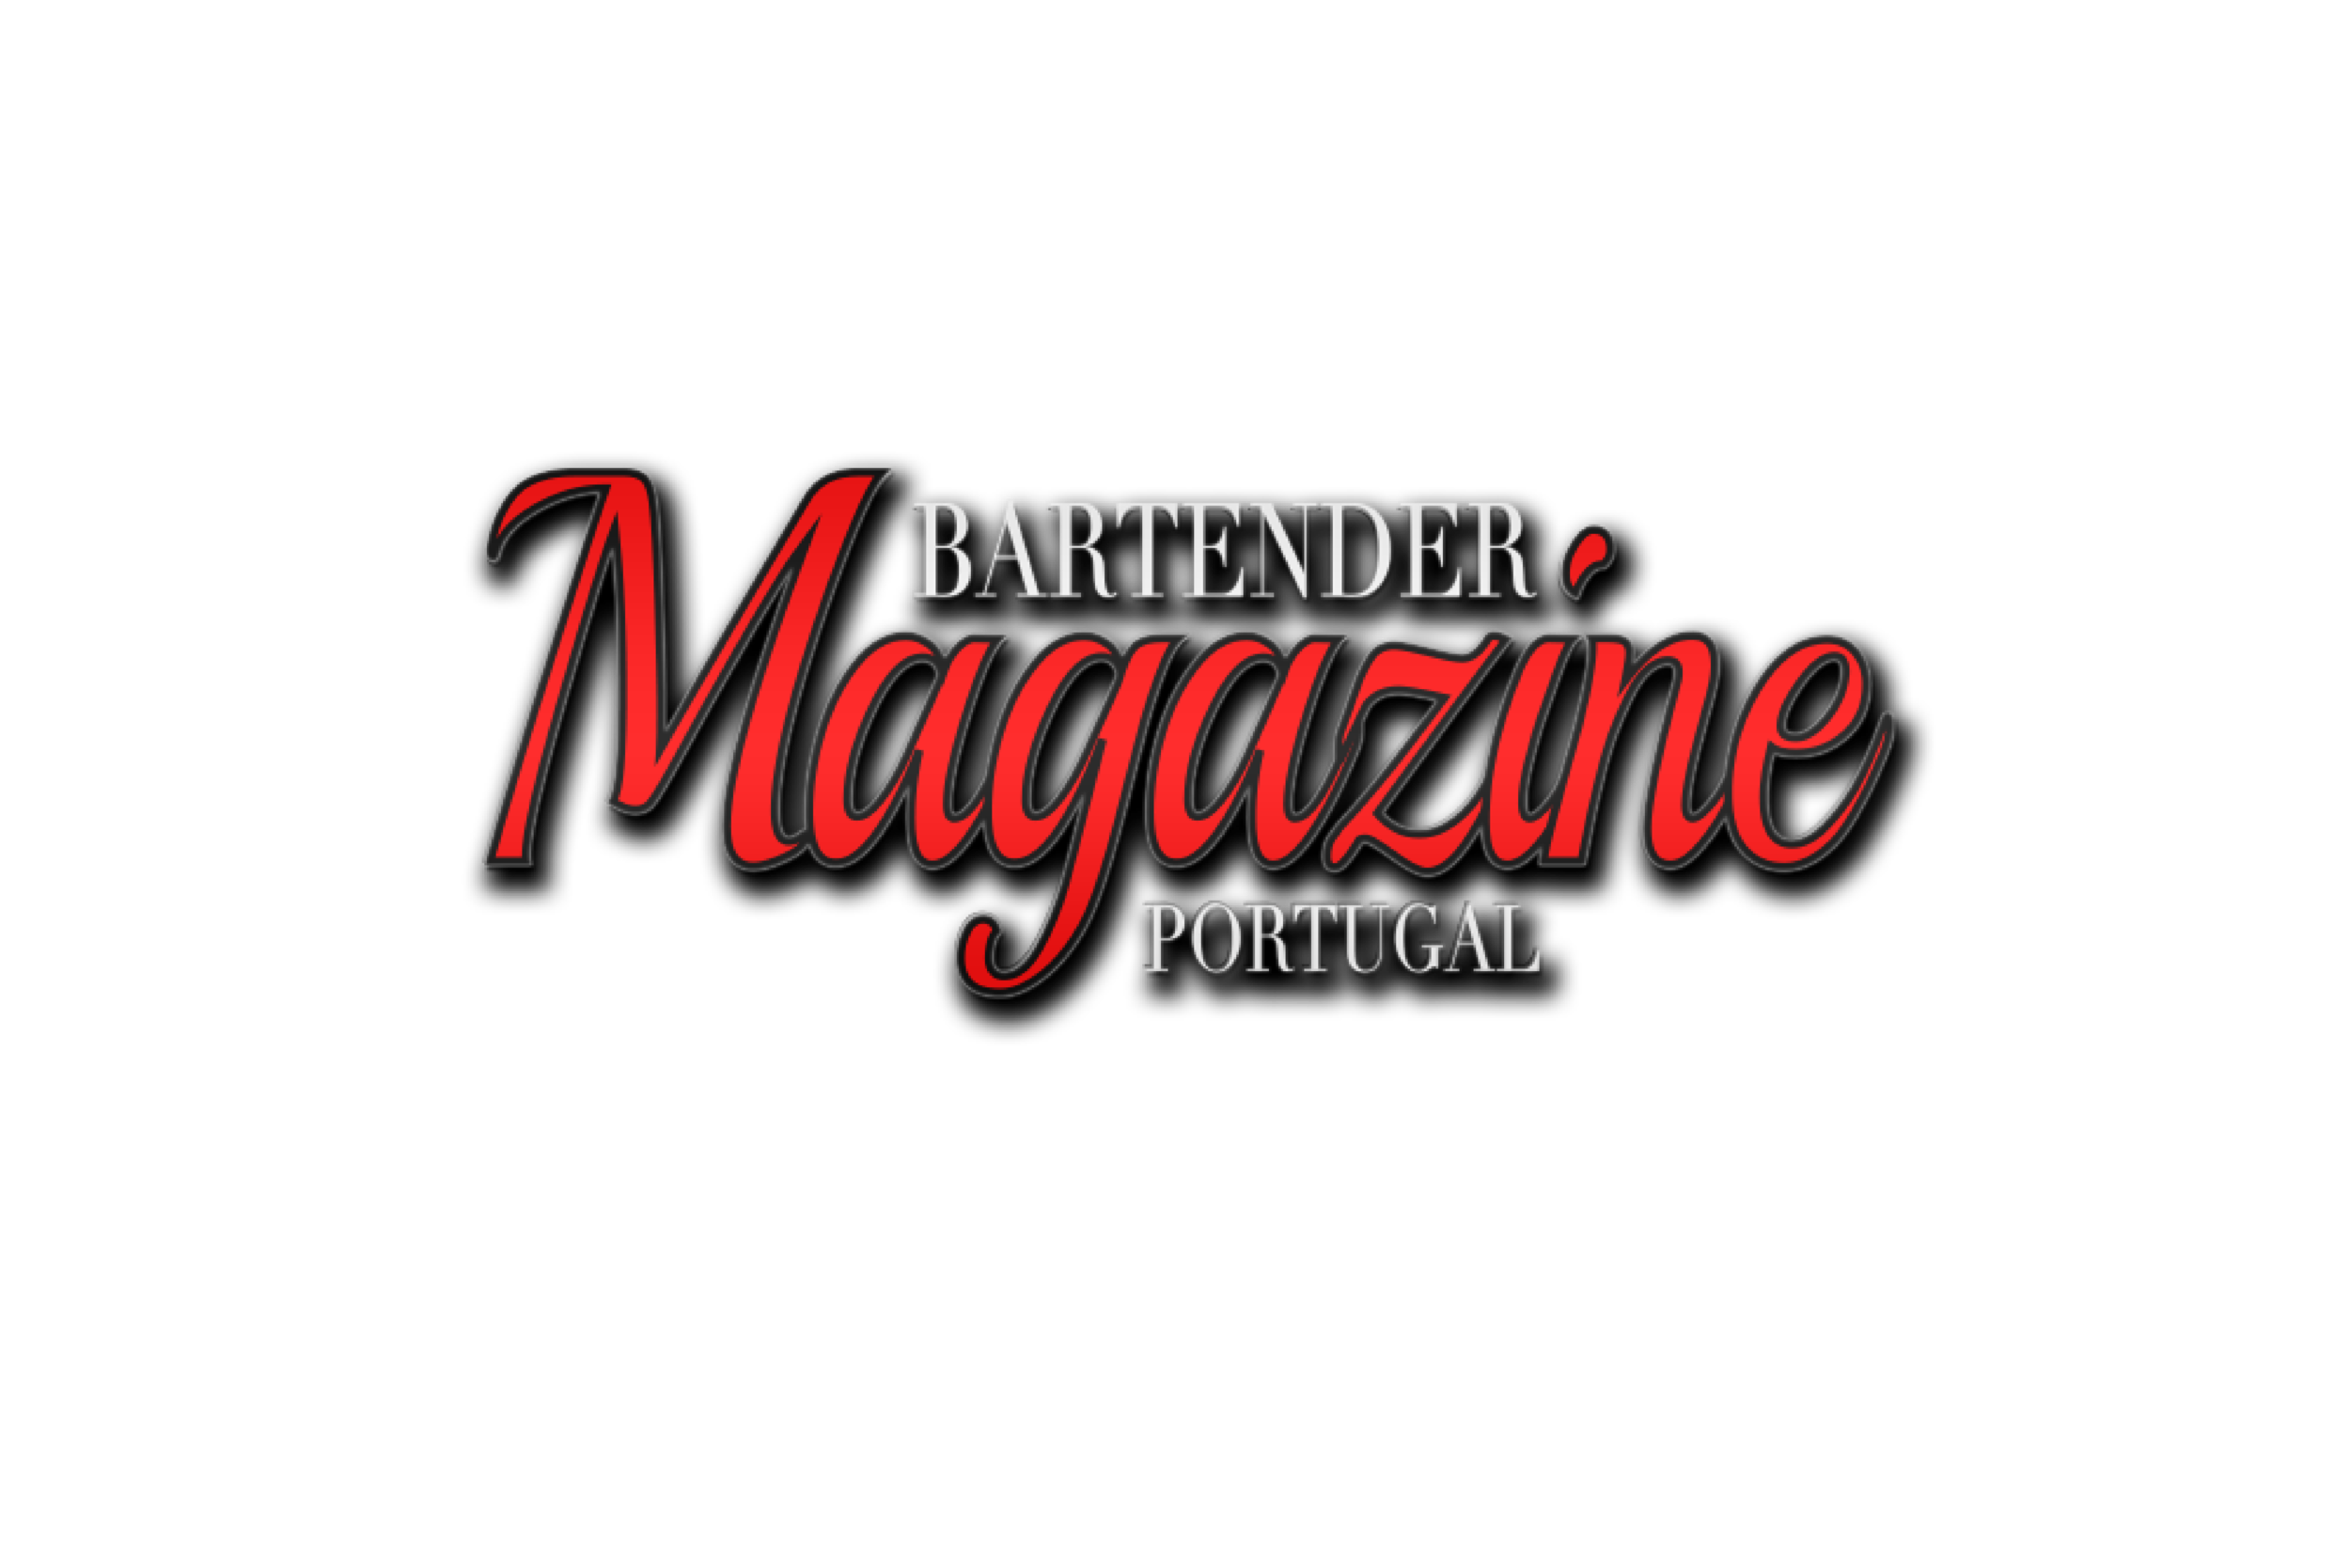 Bartender Magazine Portugal